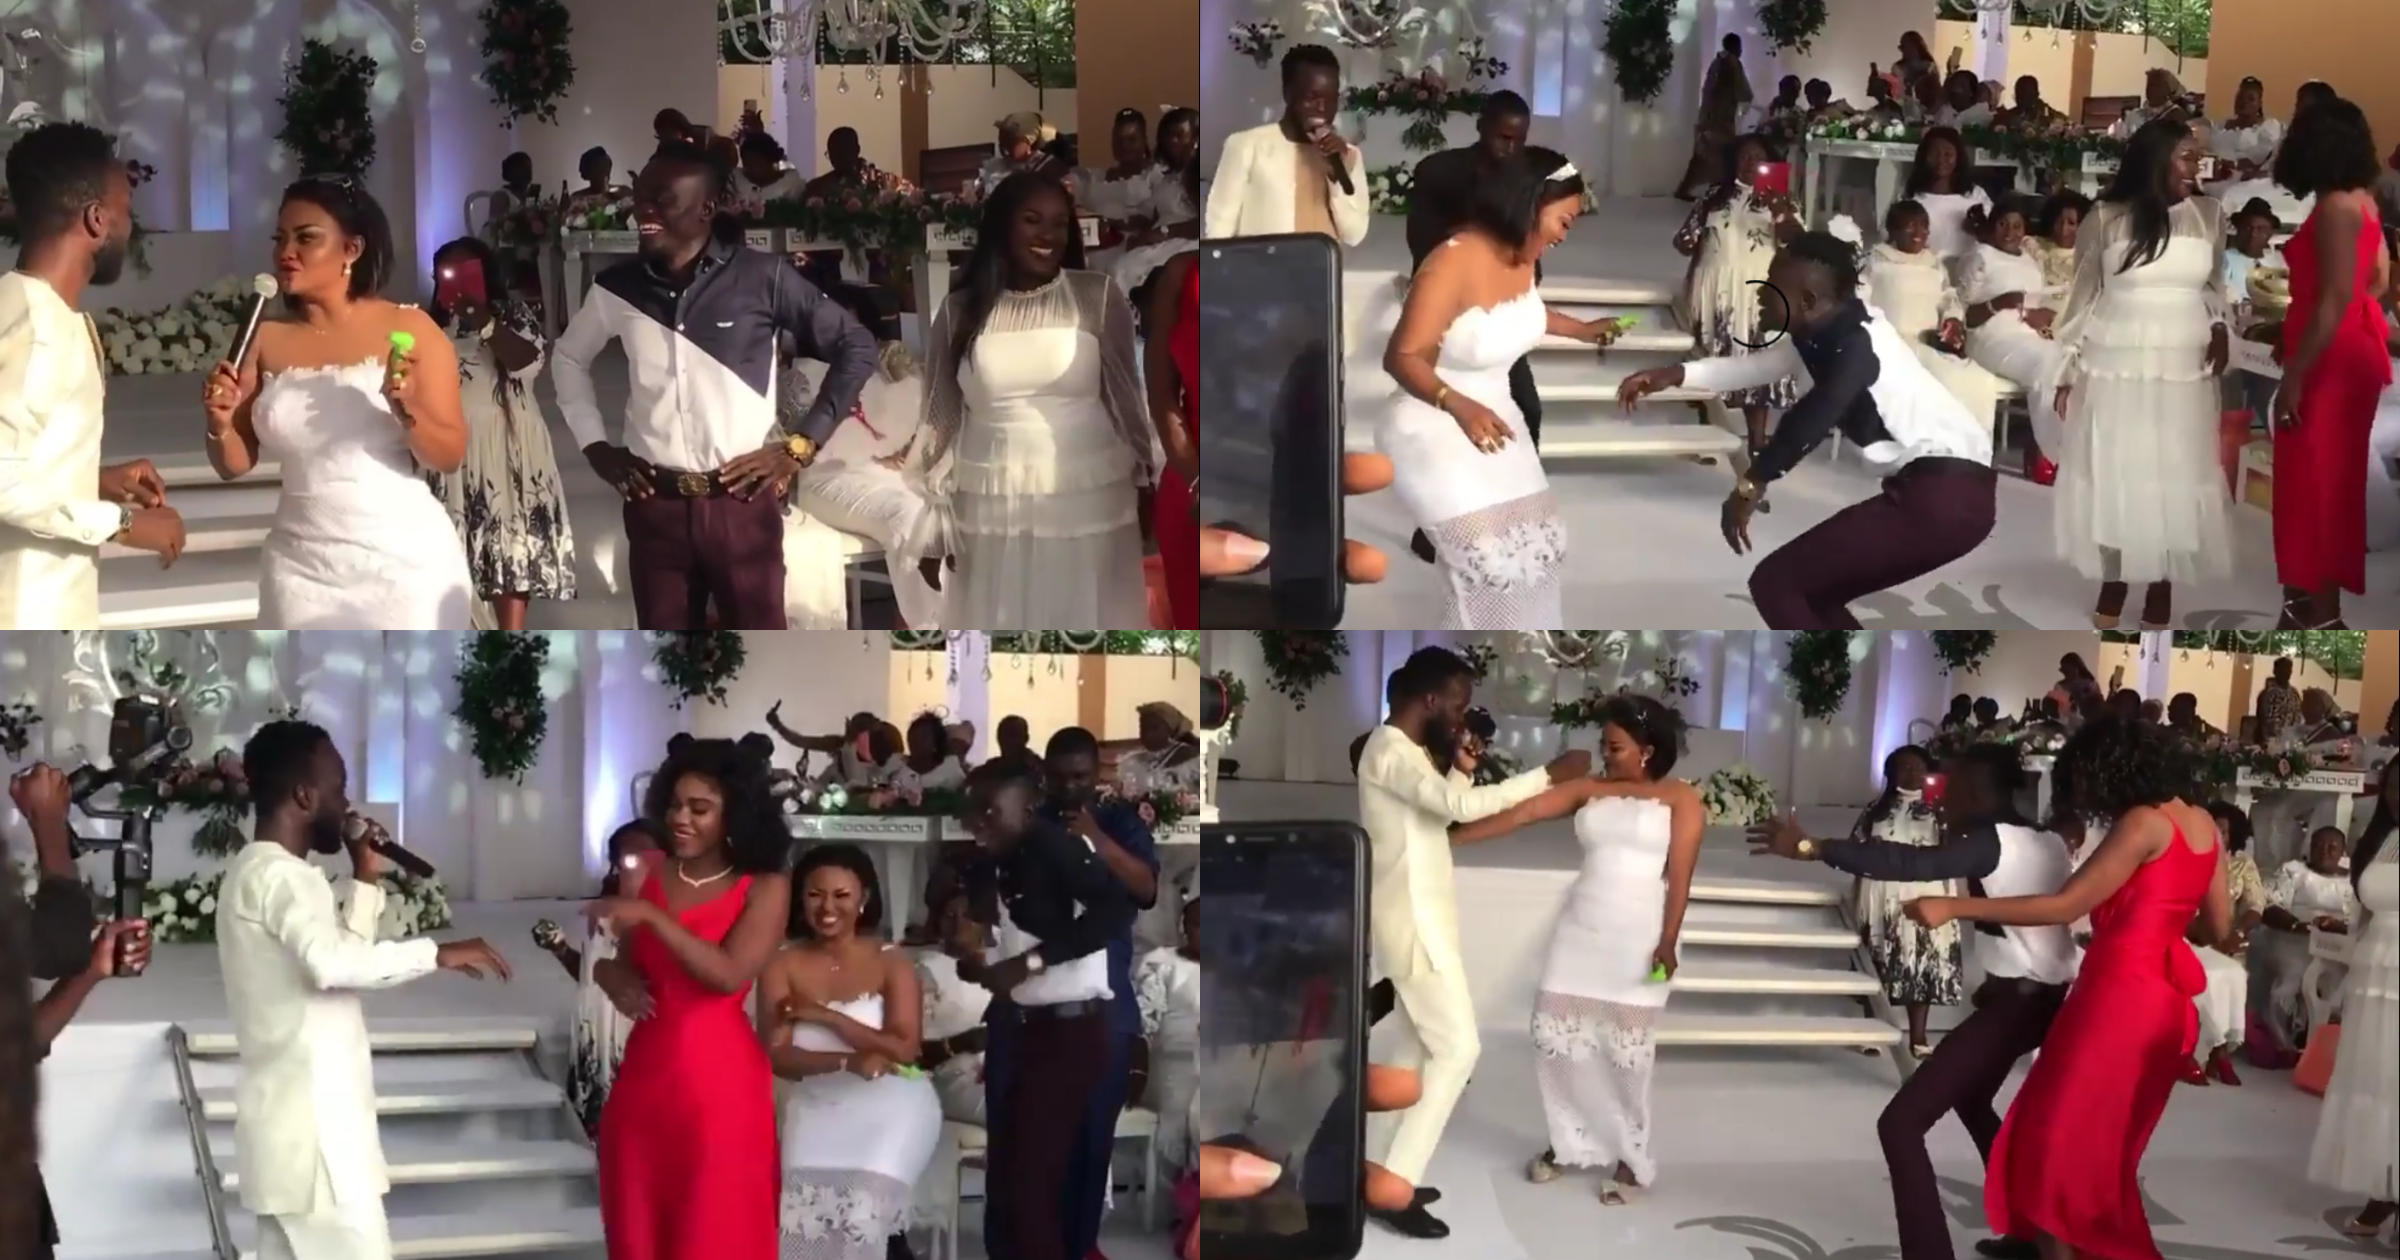 Cindy Ofori Sarpong wedding: McBrown, Lil Win, Becca, Emelia Brobbey dance